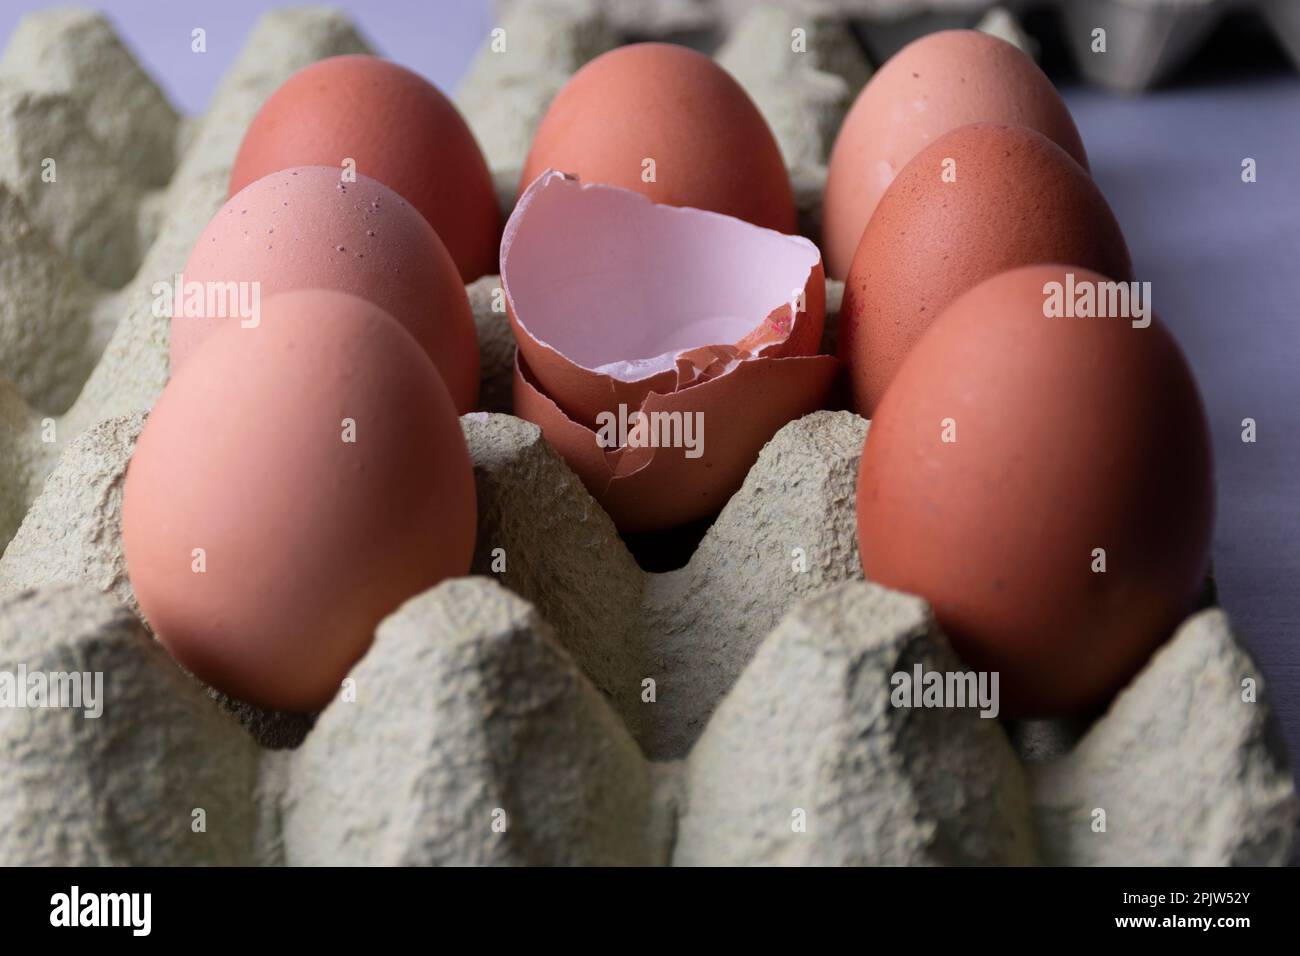 Eggs in paper box Stock Photo